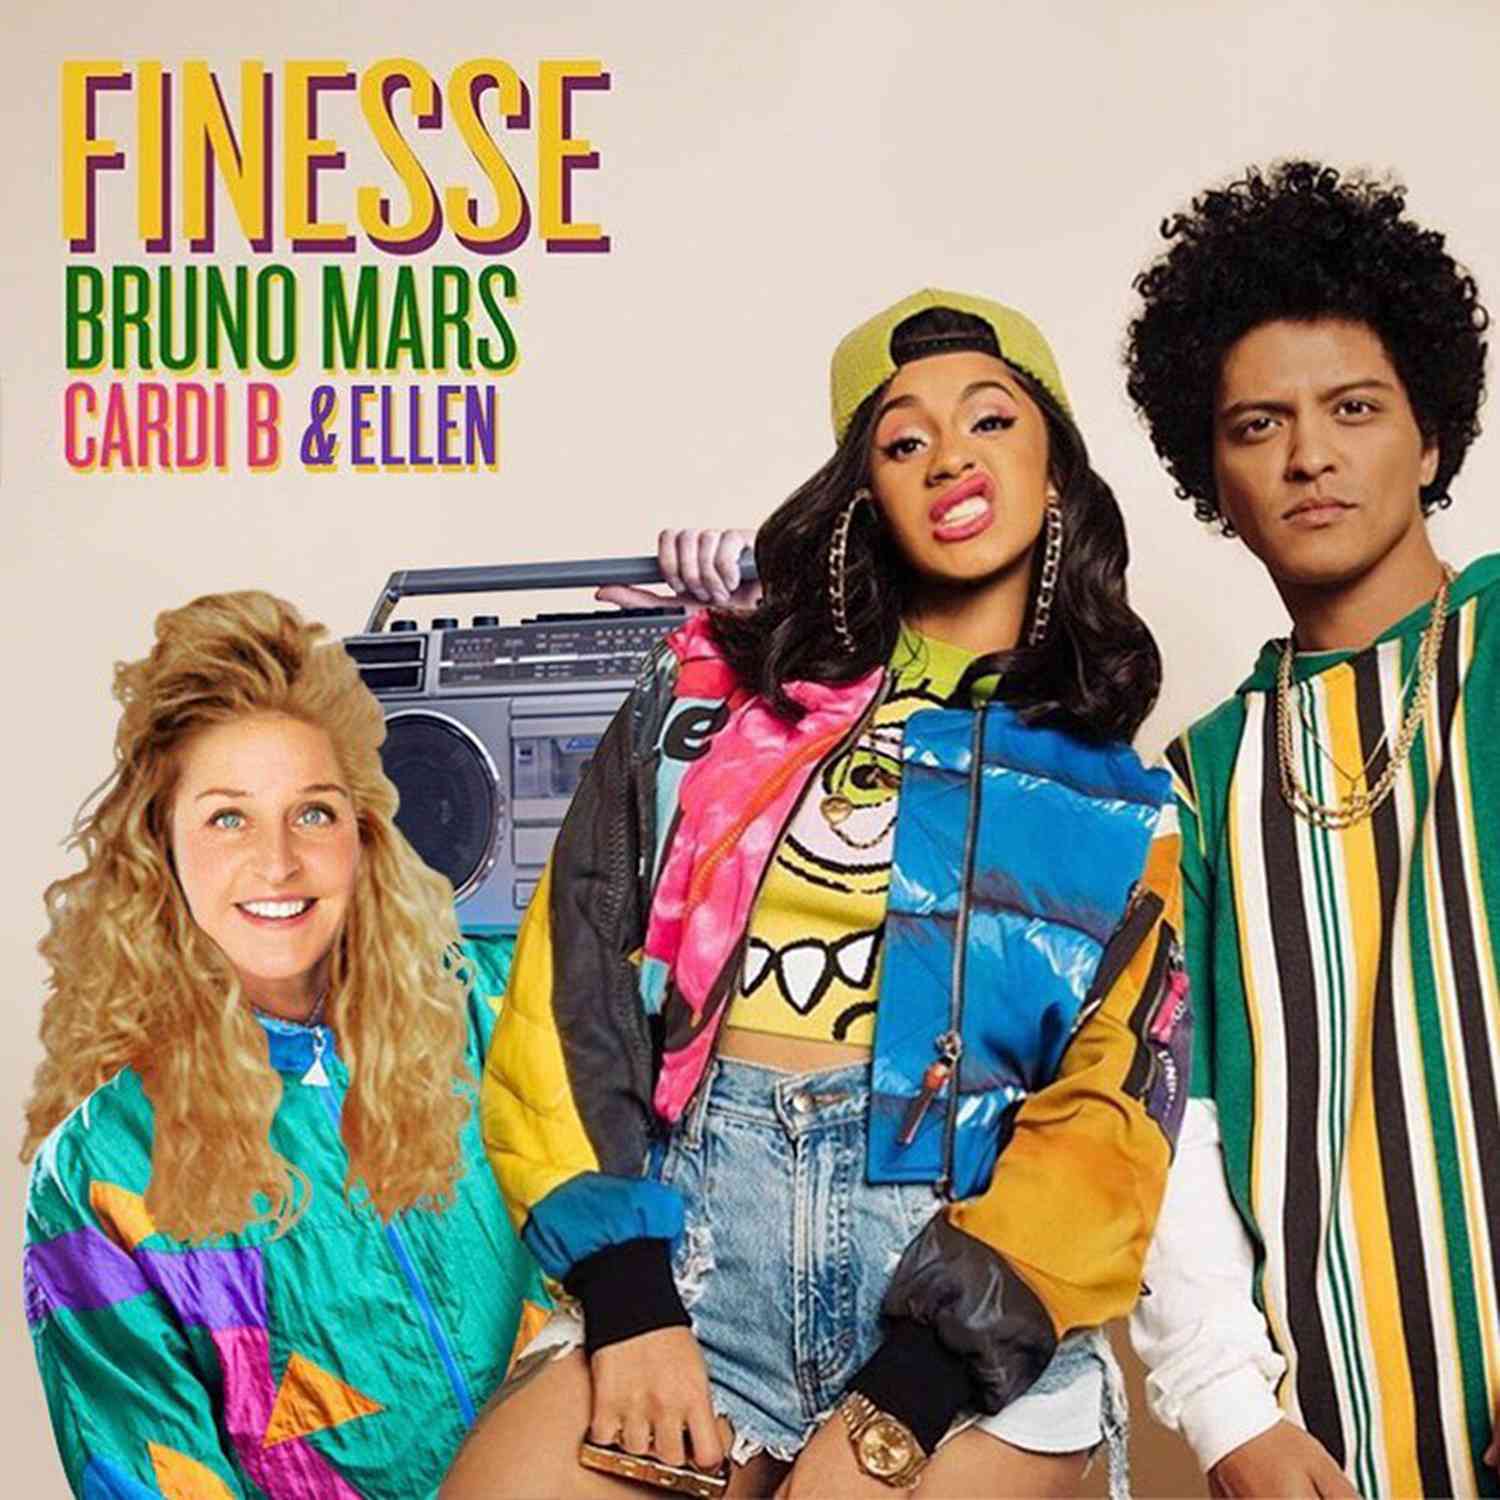 Bruno Mars and Cardi B